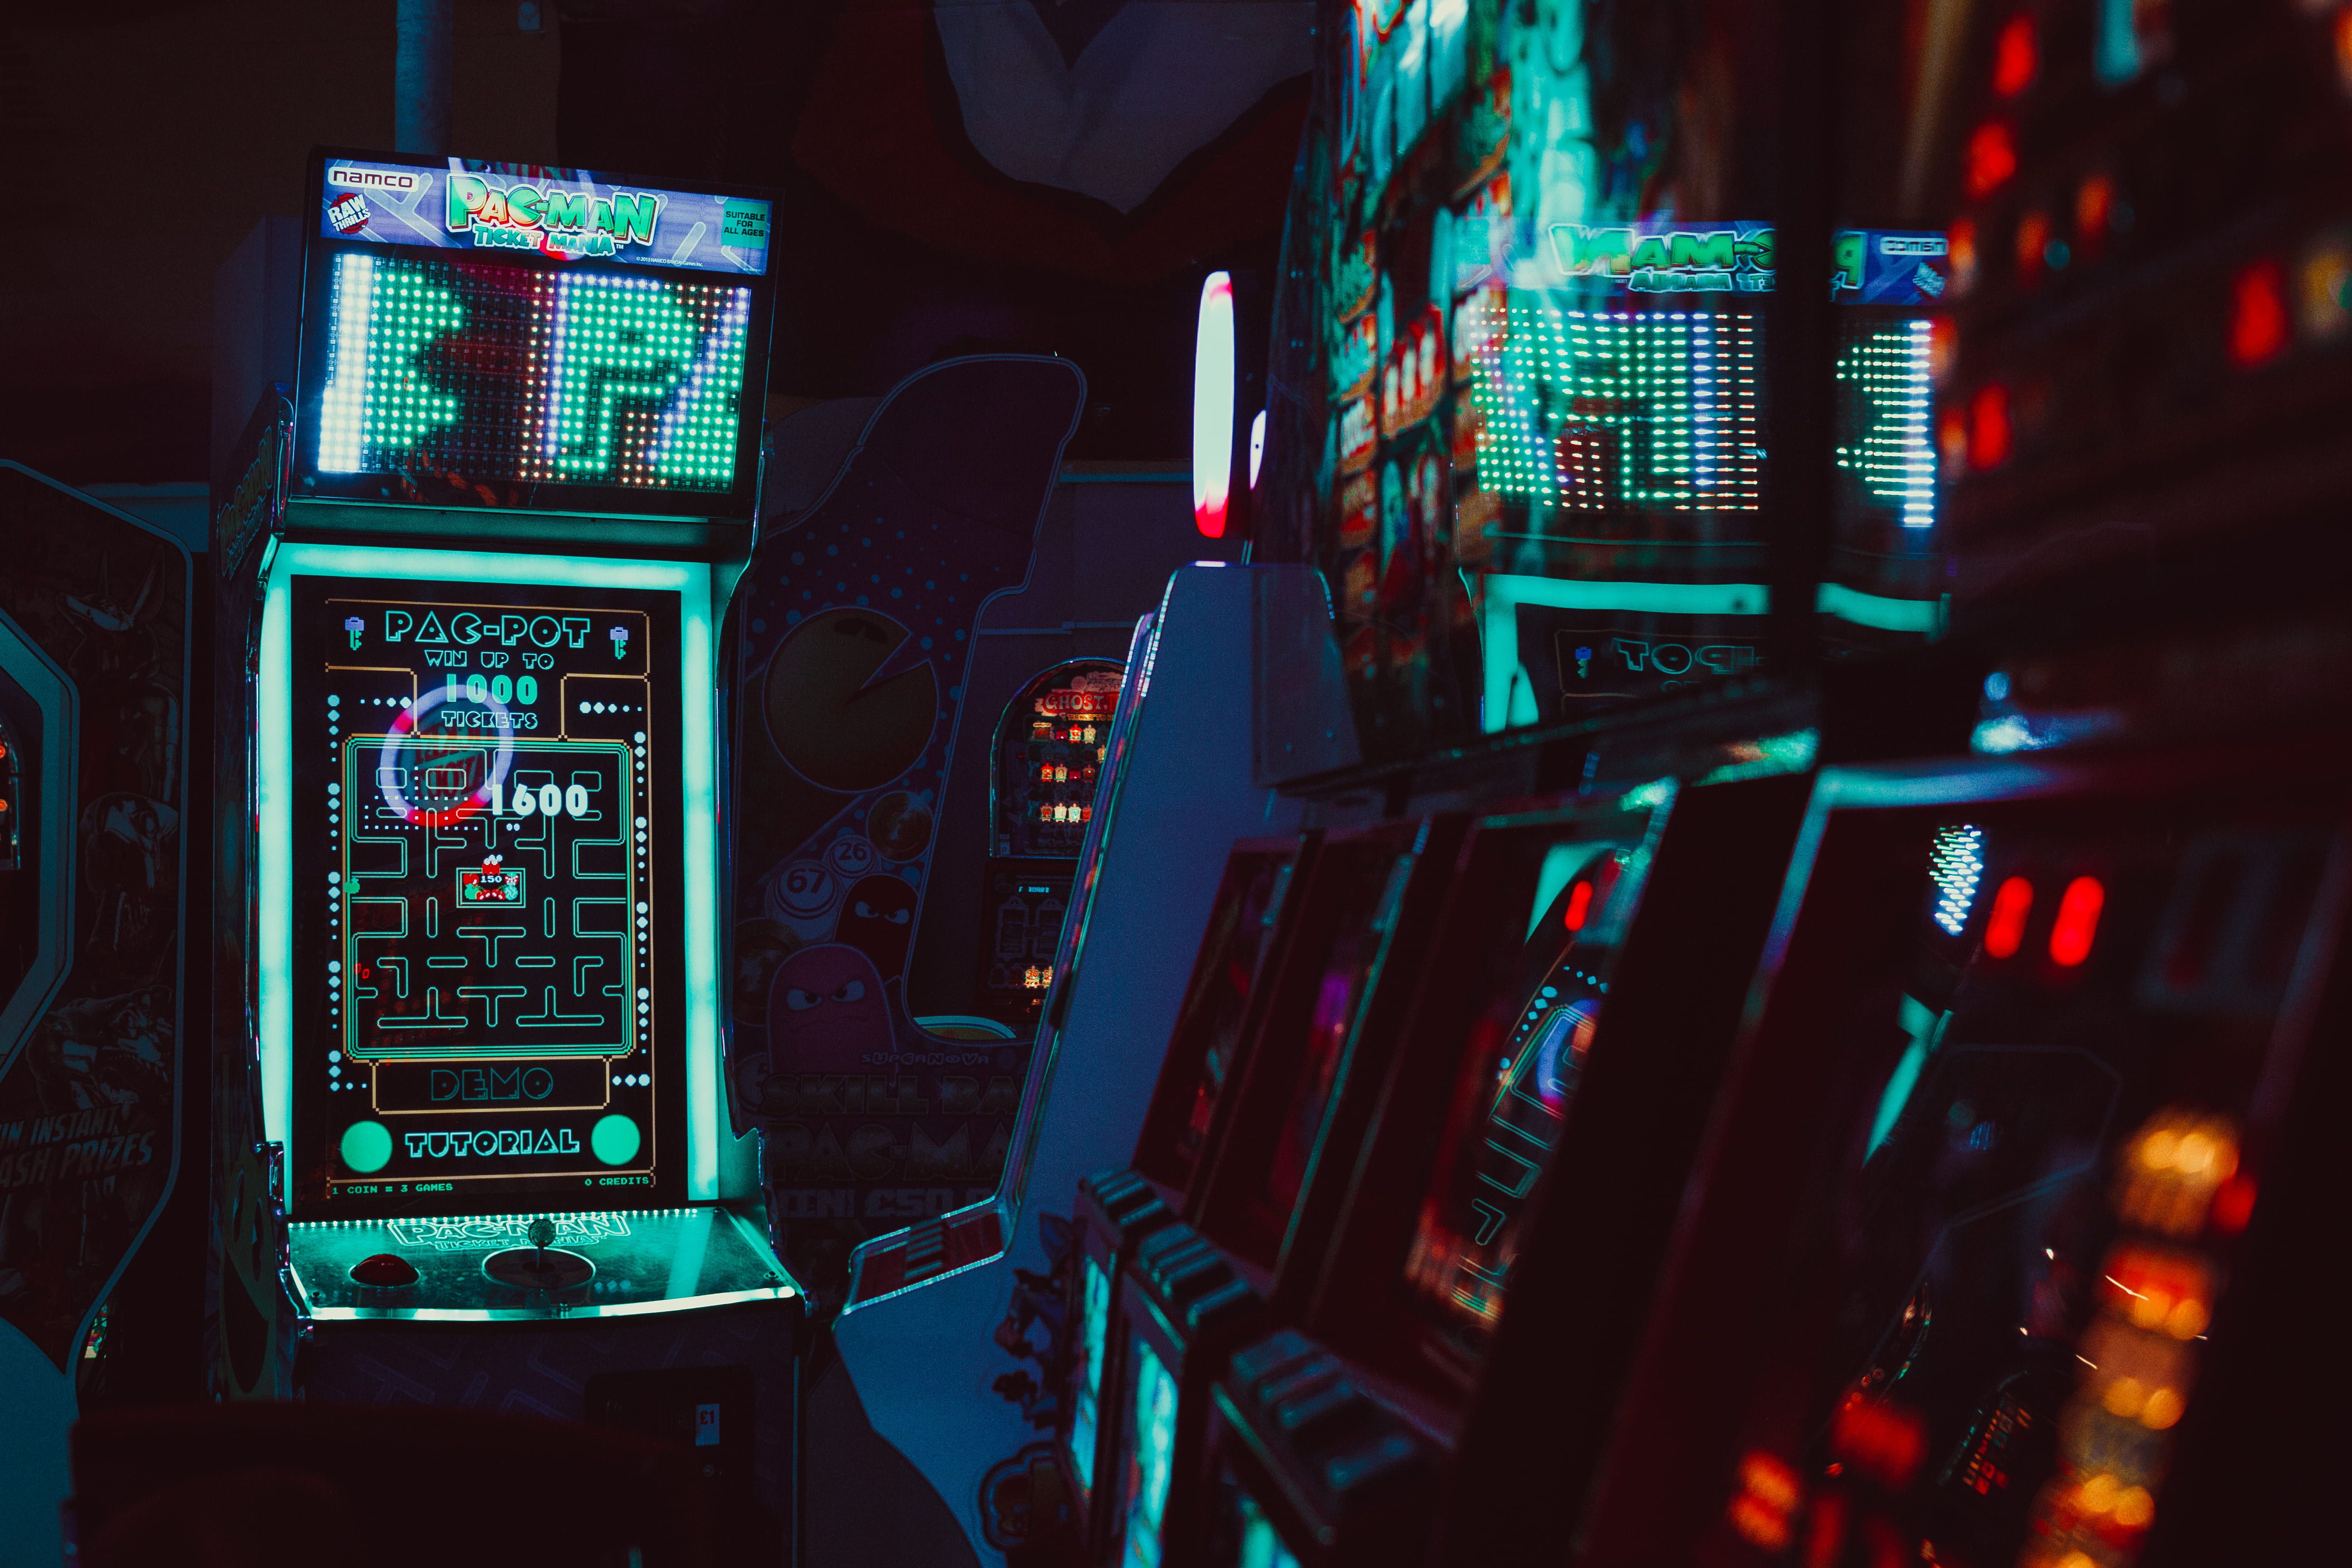 Lumen P3 Teal And Black Pacman Arcade Machine Game